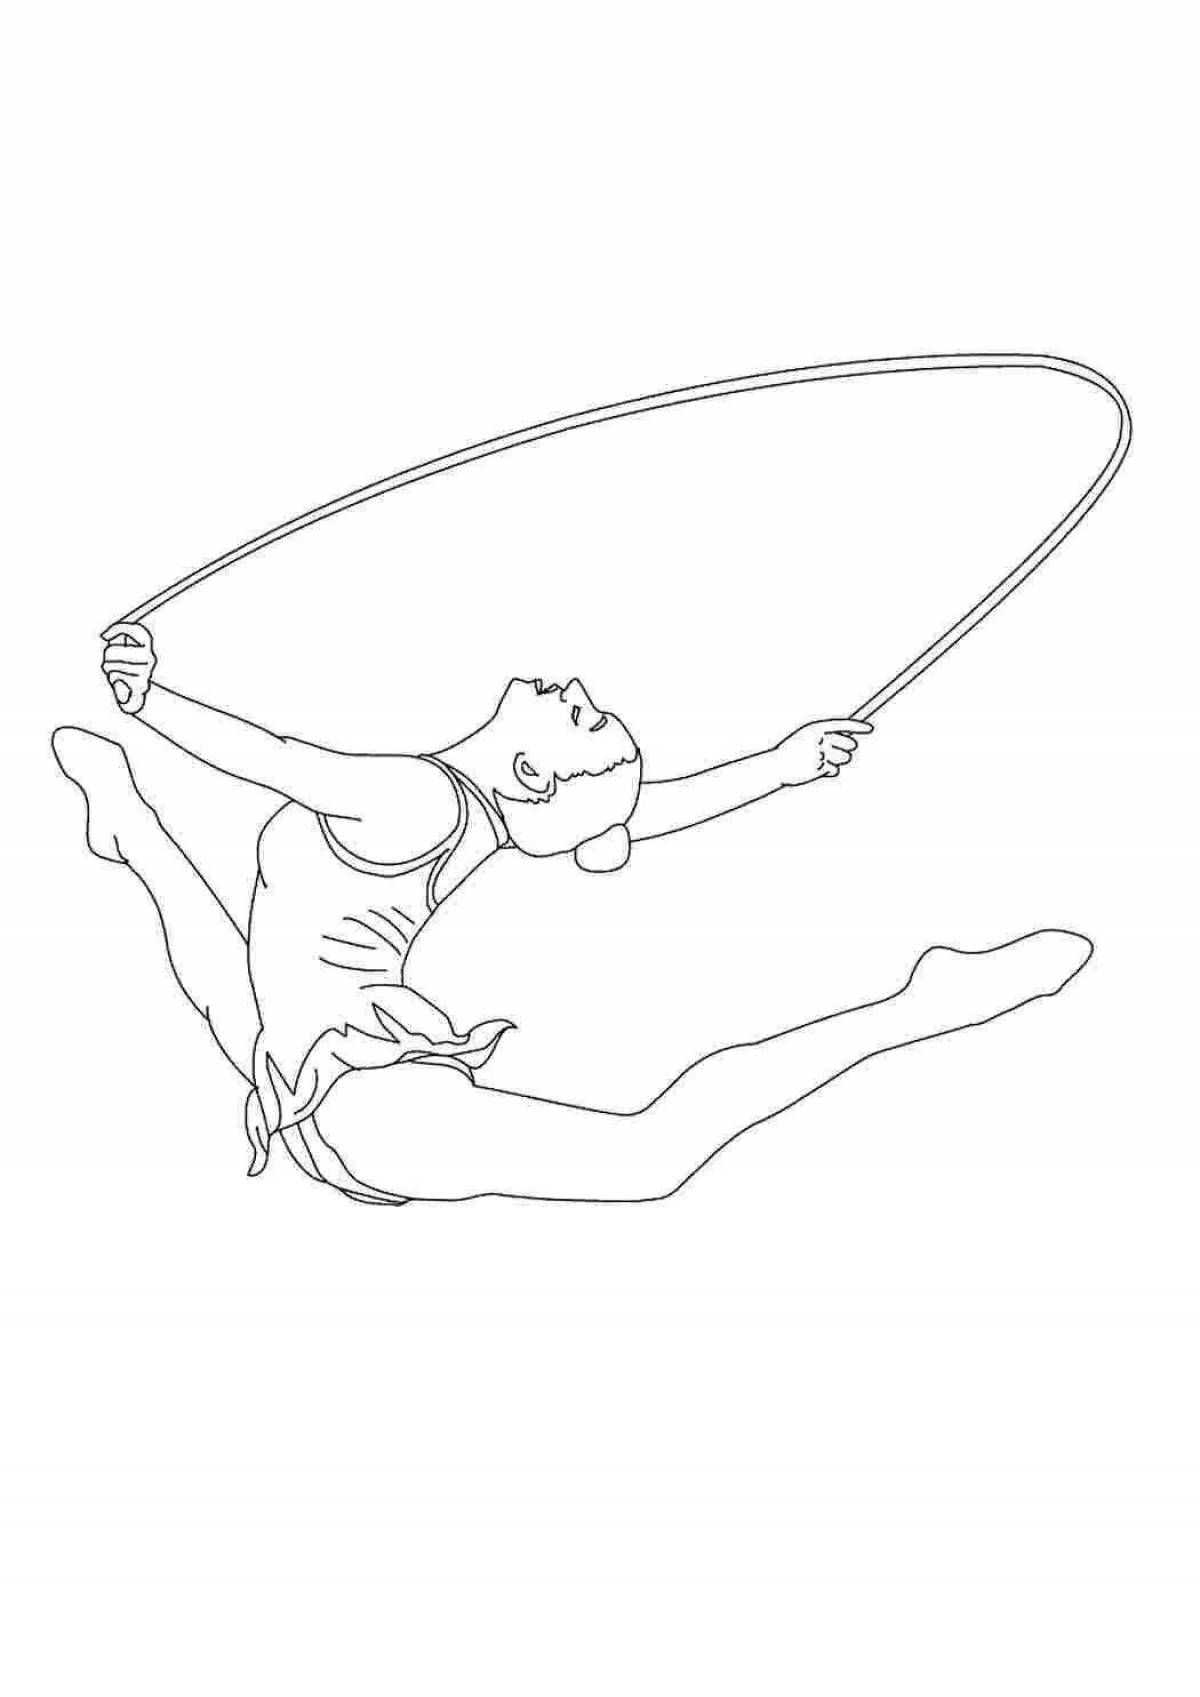 Gymnast with ribbon